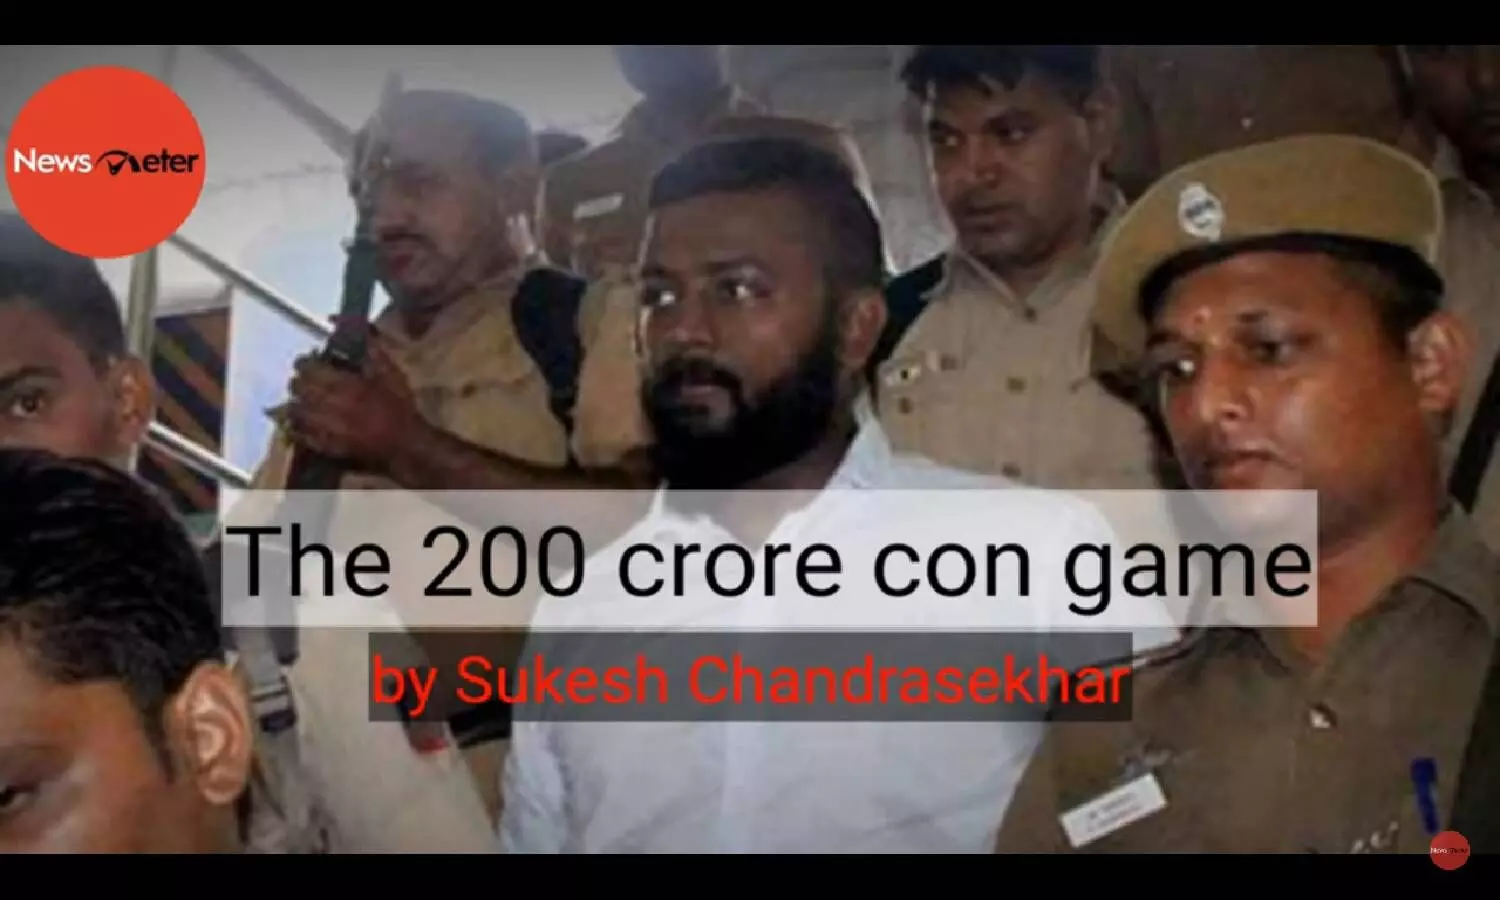 The 200 crore con game by Sukesh Chandrasekhar